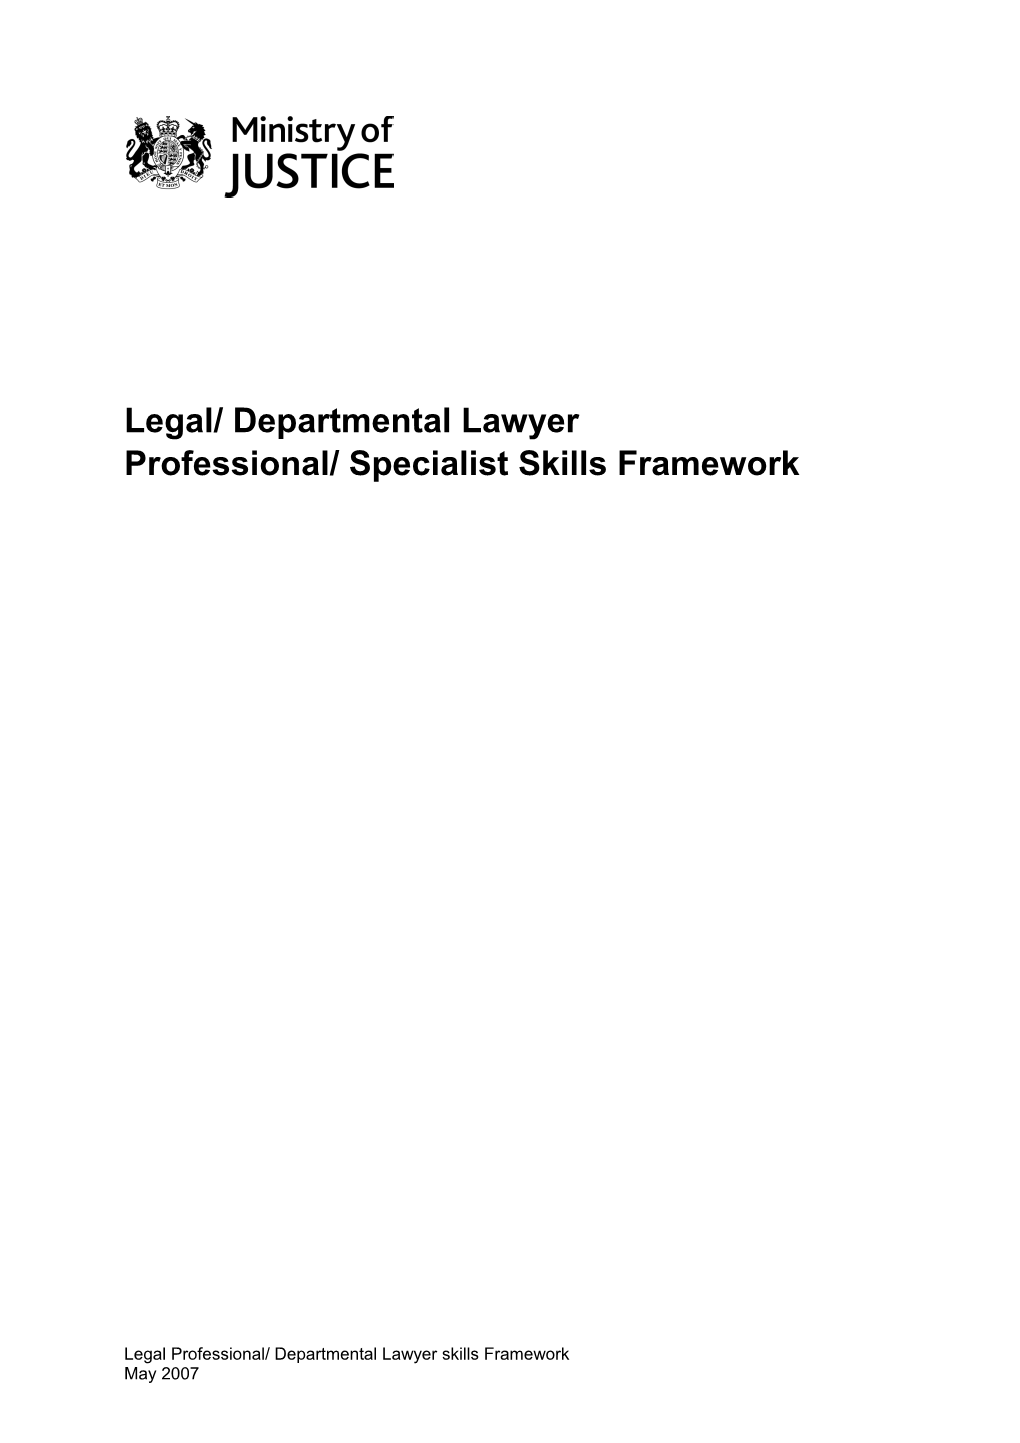 Departmental Lawyer Professional Specialist Skills Framework